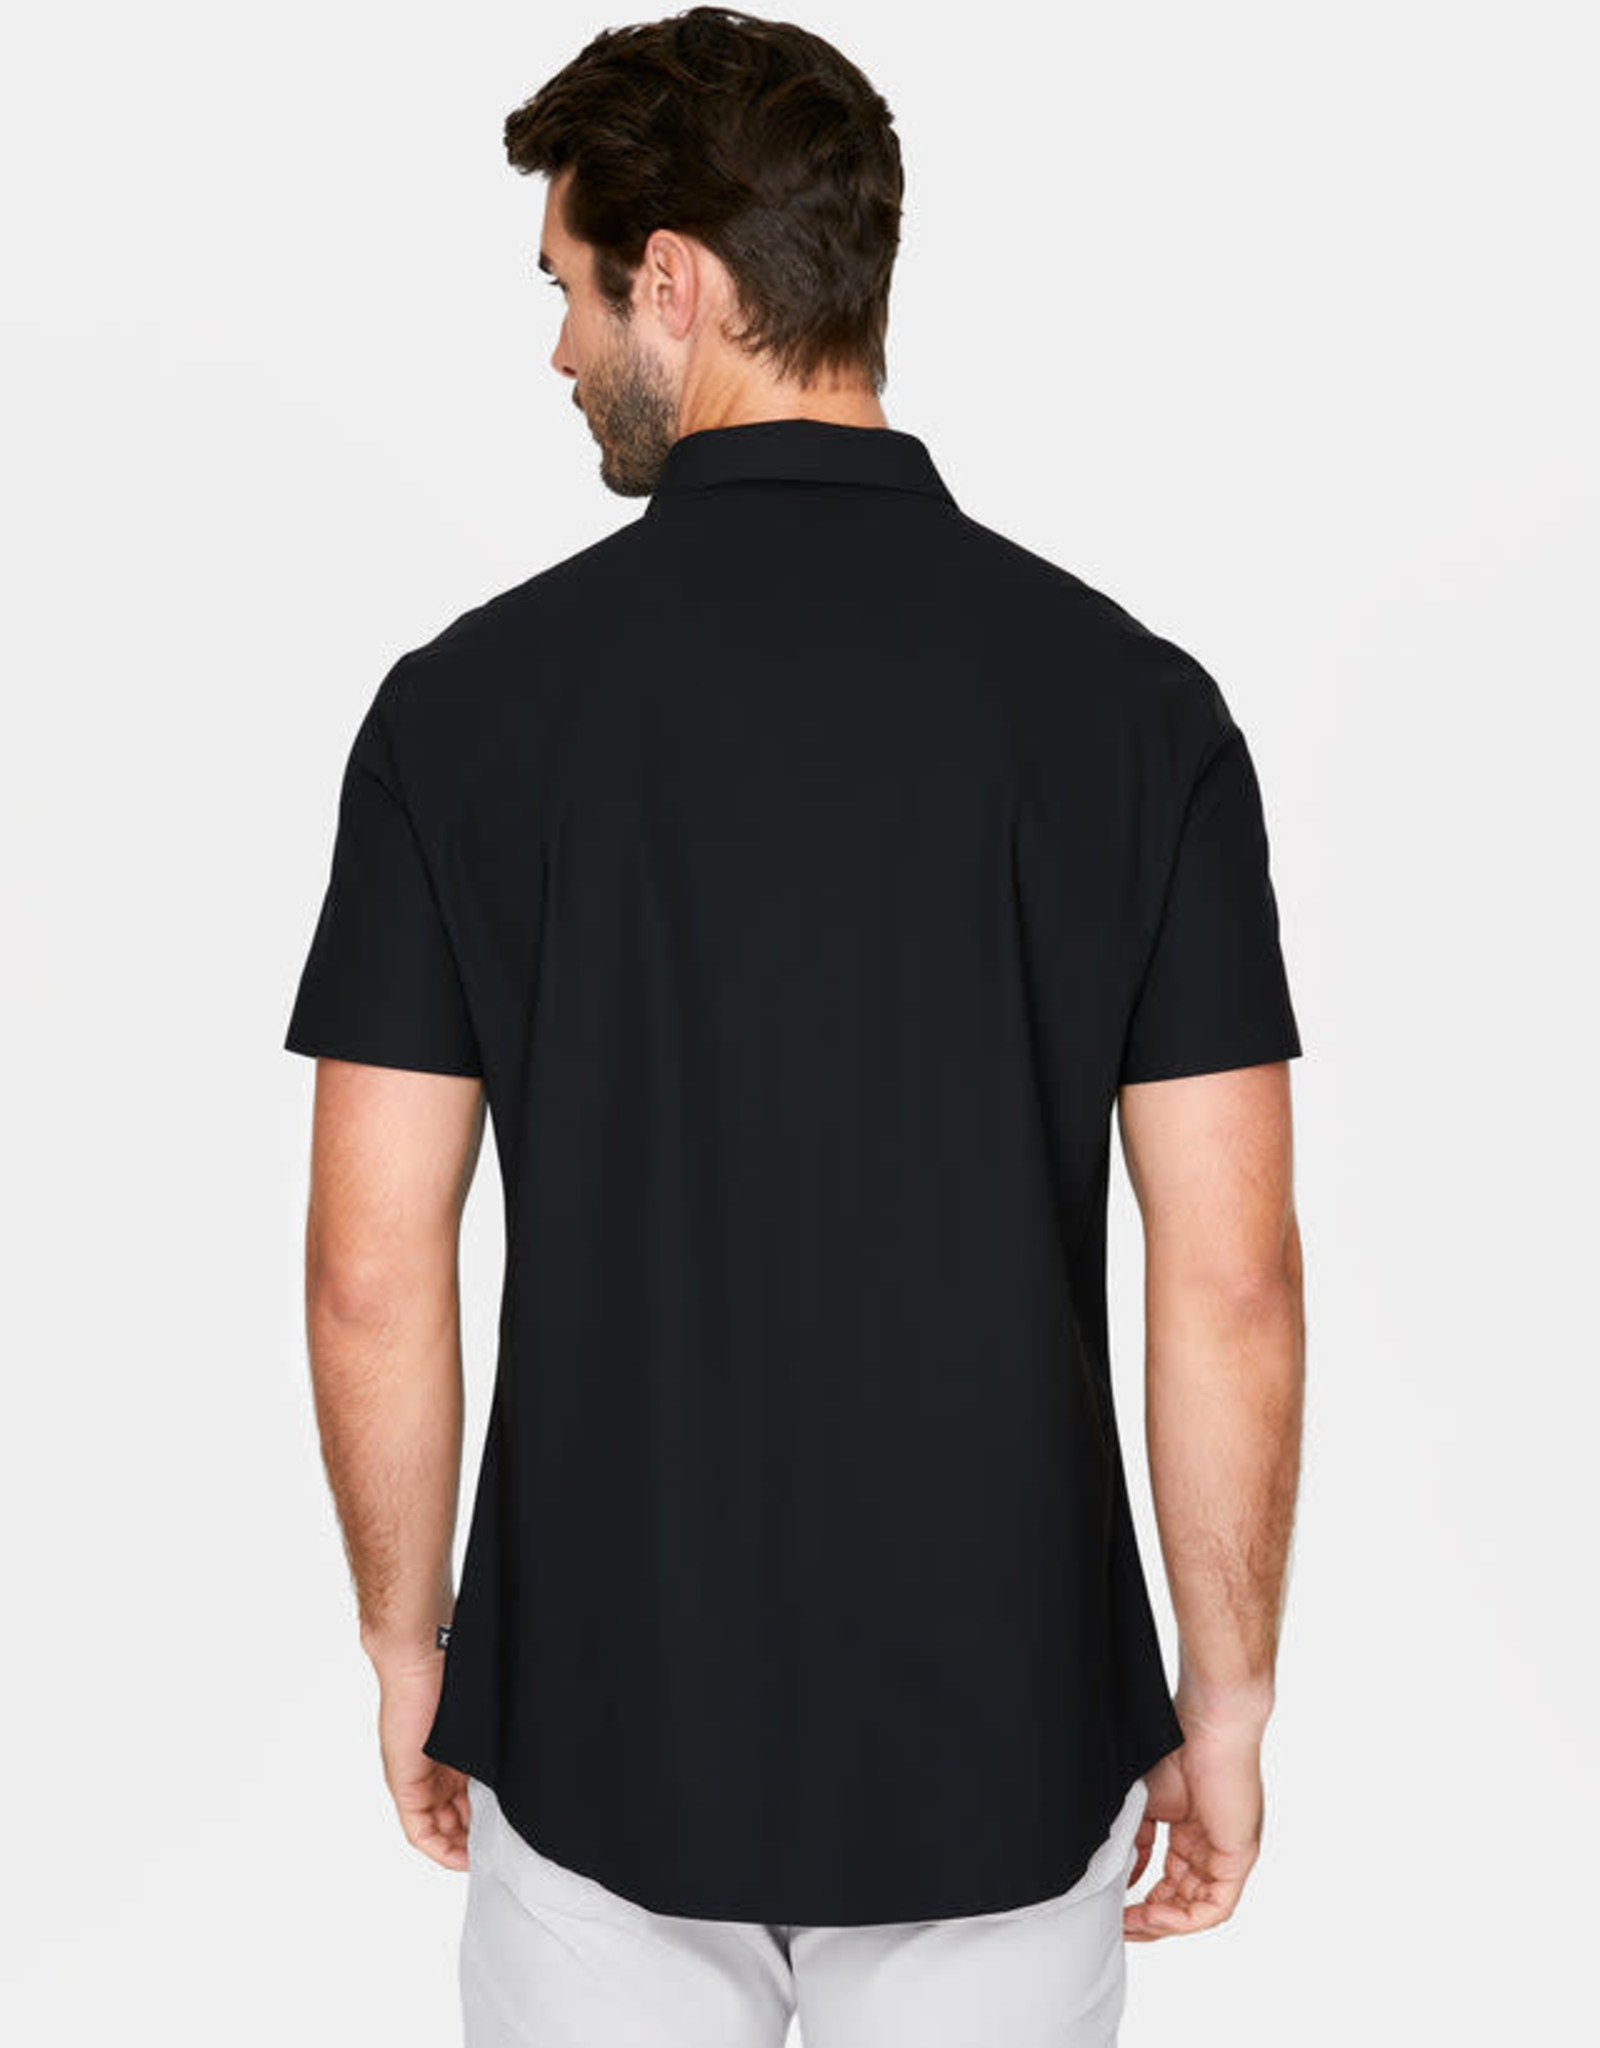 7 Diamonds Clothing Company Black  4-Way Stretch Short Sleeve Shirt